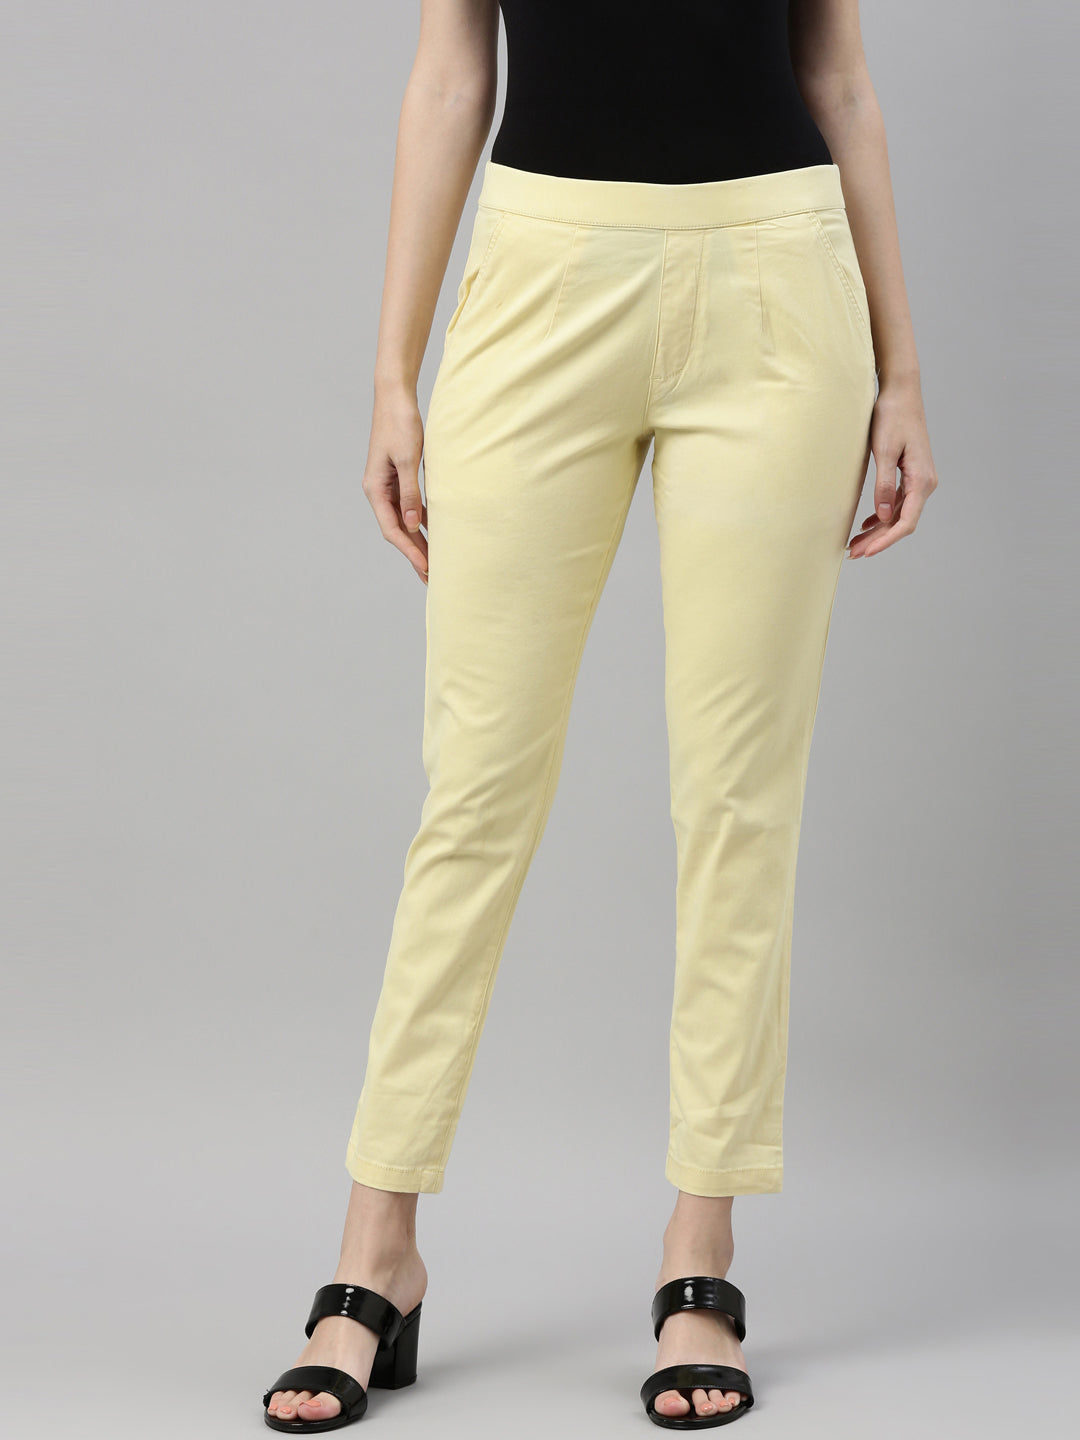 Off White Cotton Linen Stretchable Pants | BRAZIL-OFF WHITE | Cilory.com